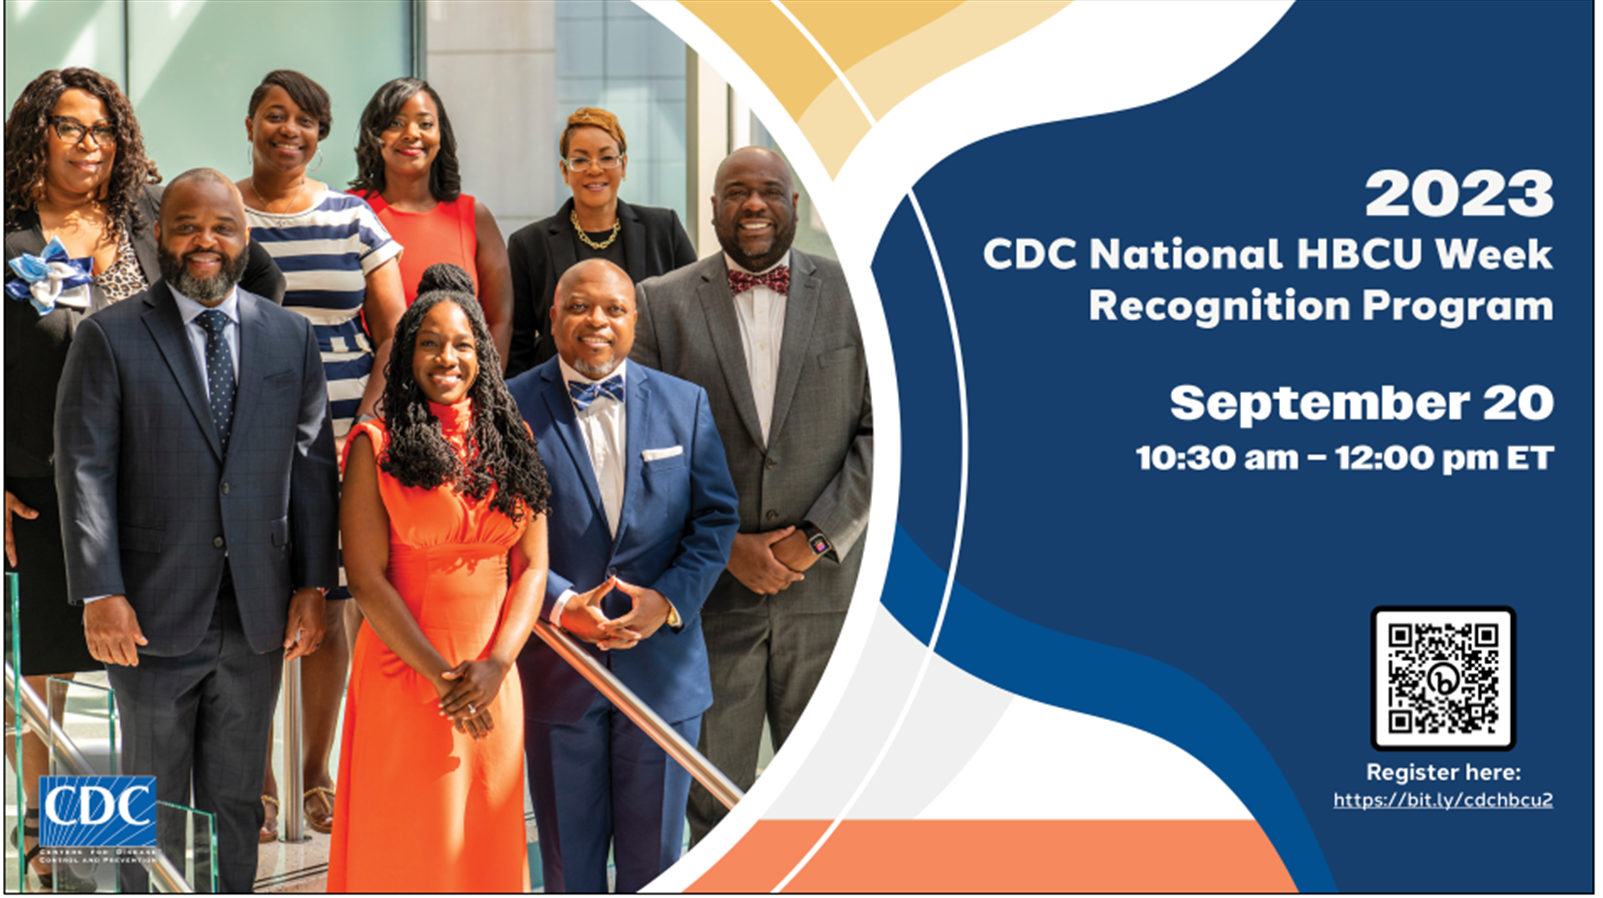 CDC National HBCU Week Recognition Program